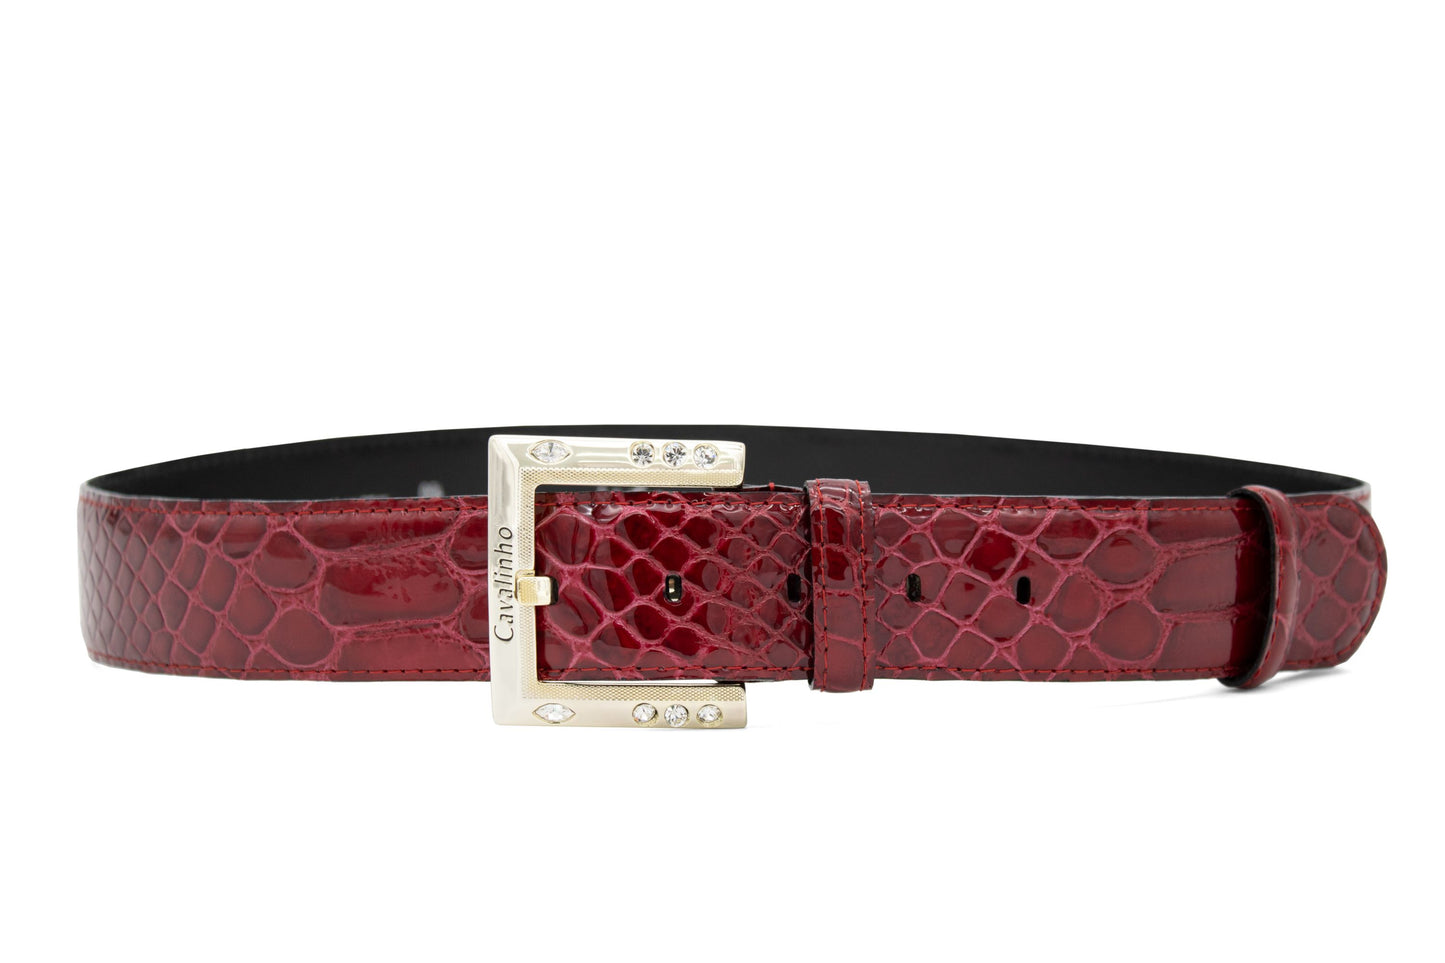 Cavalinho Galope Patent Leather Belt - DarkRed Gold - 58010810.04_1